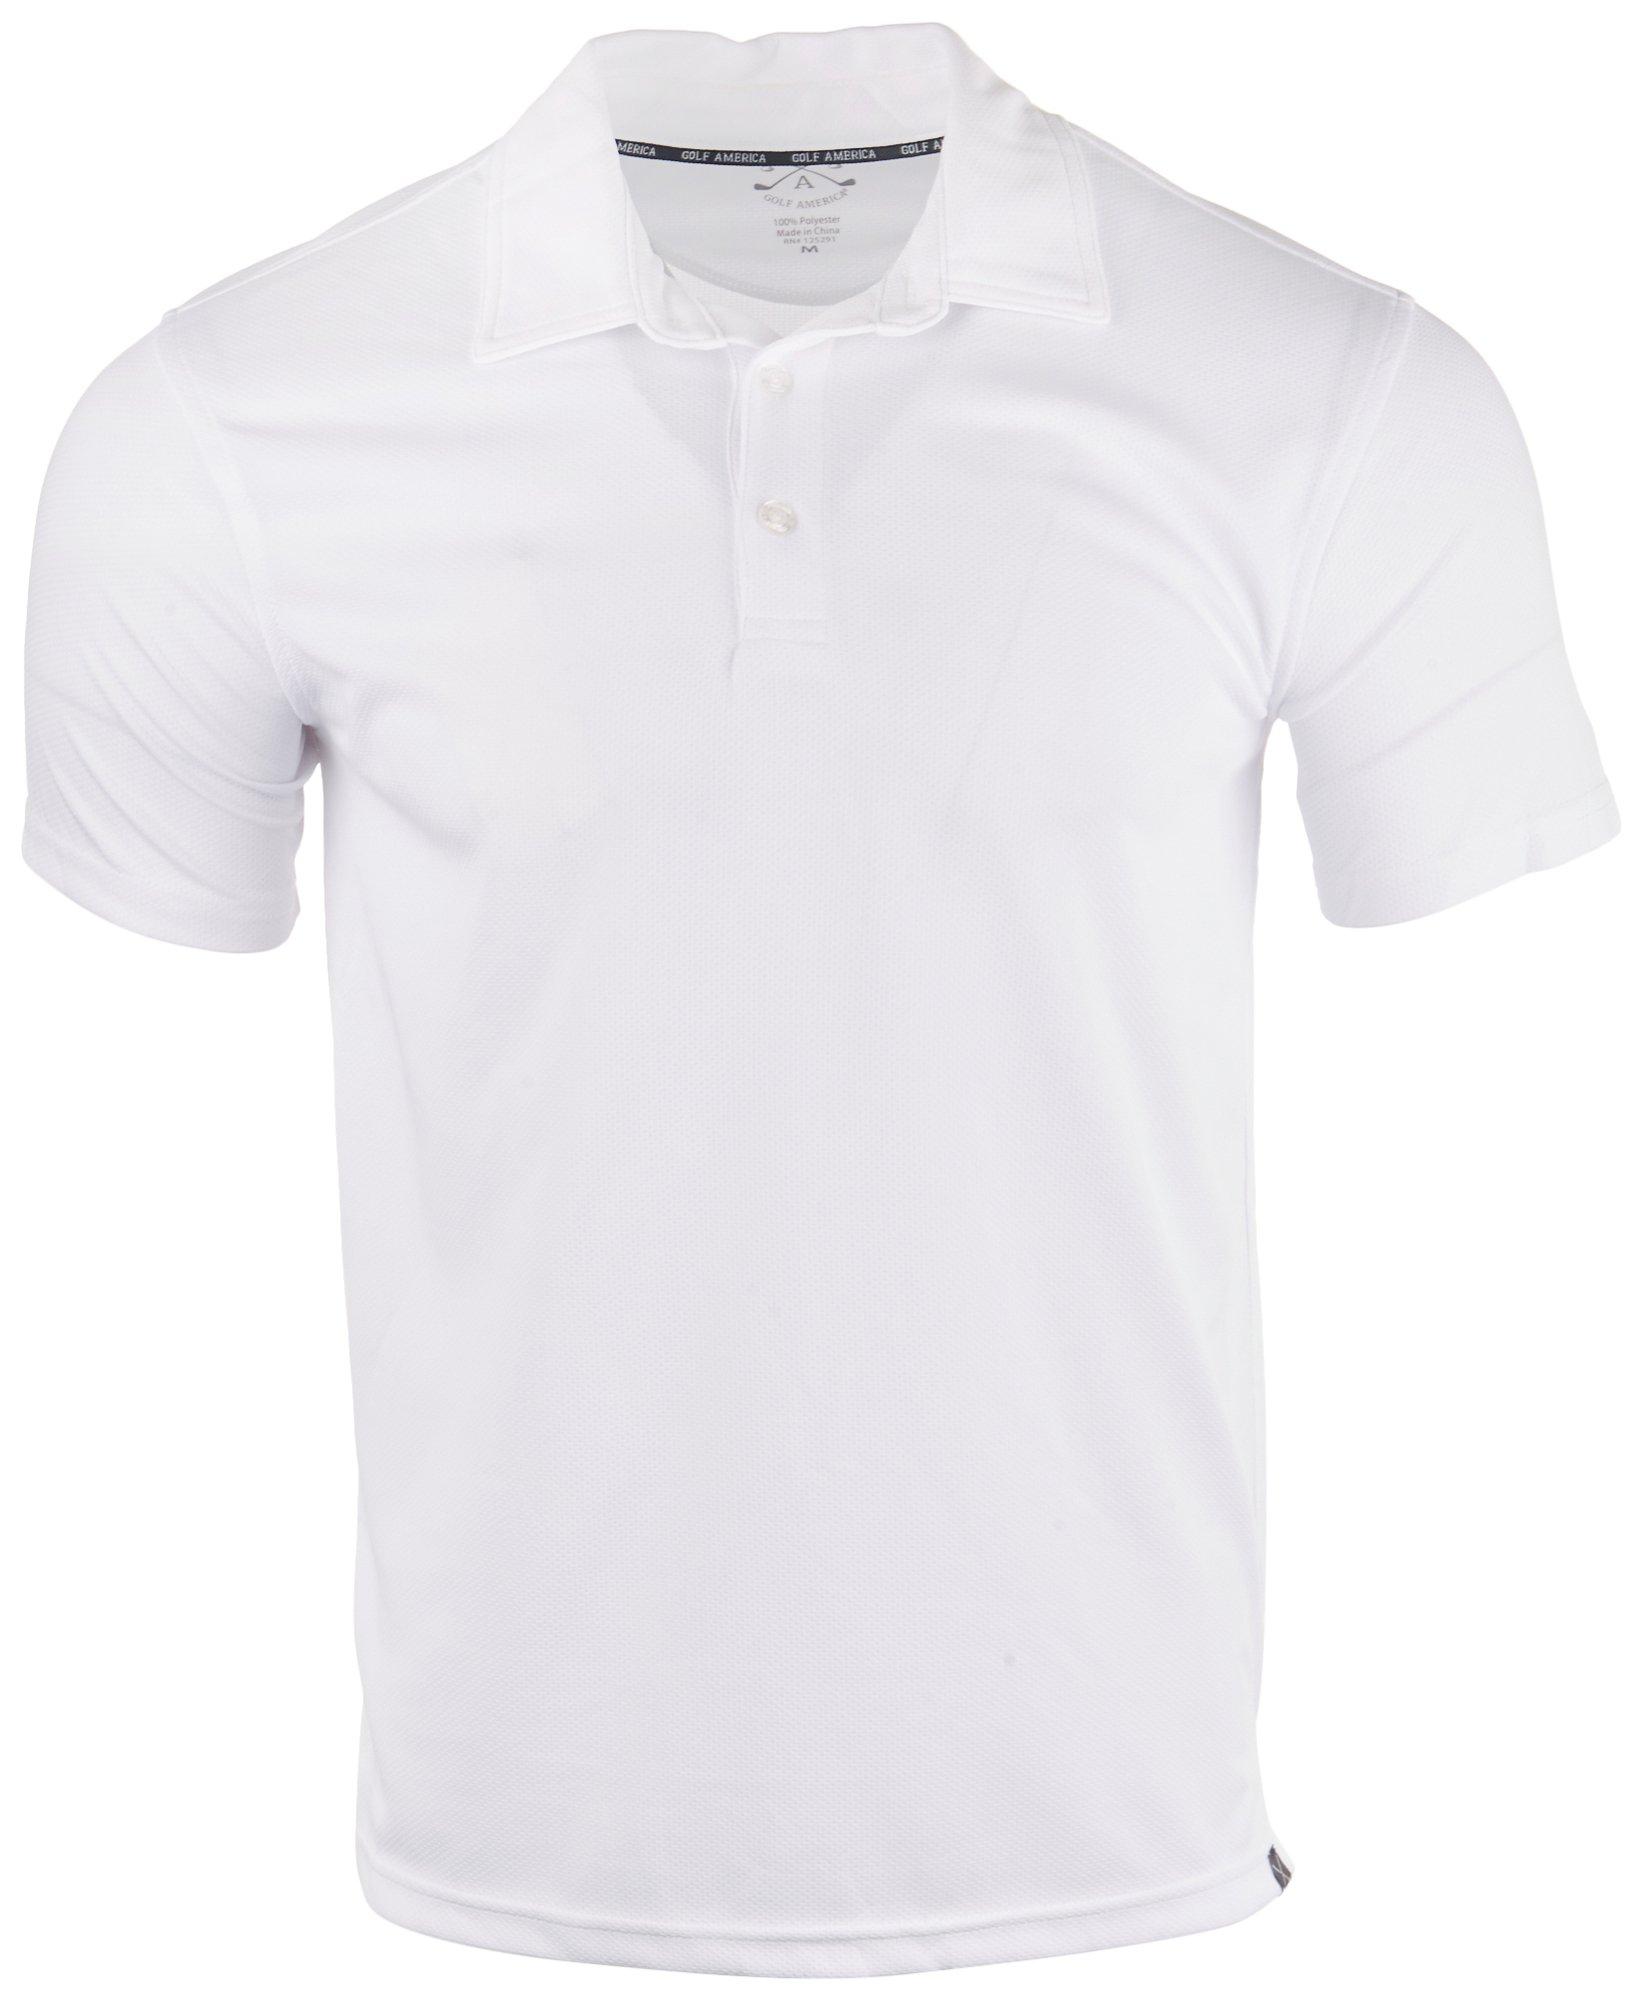 Golf America Mens Solid Knit Polo Shirt